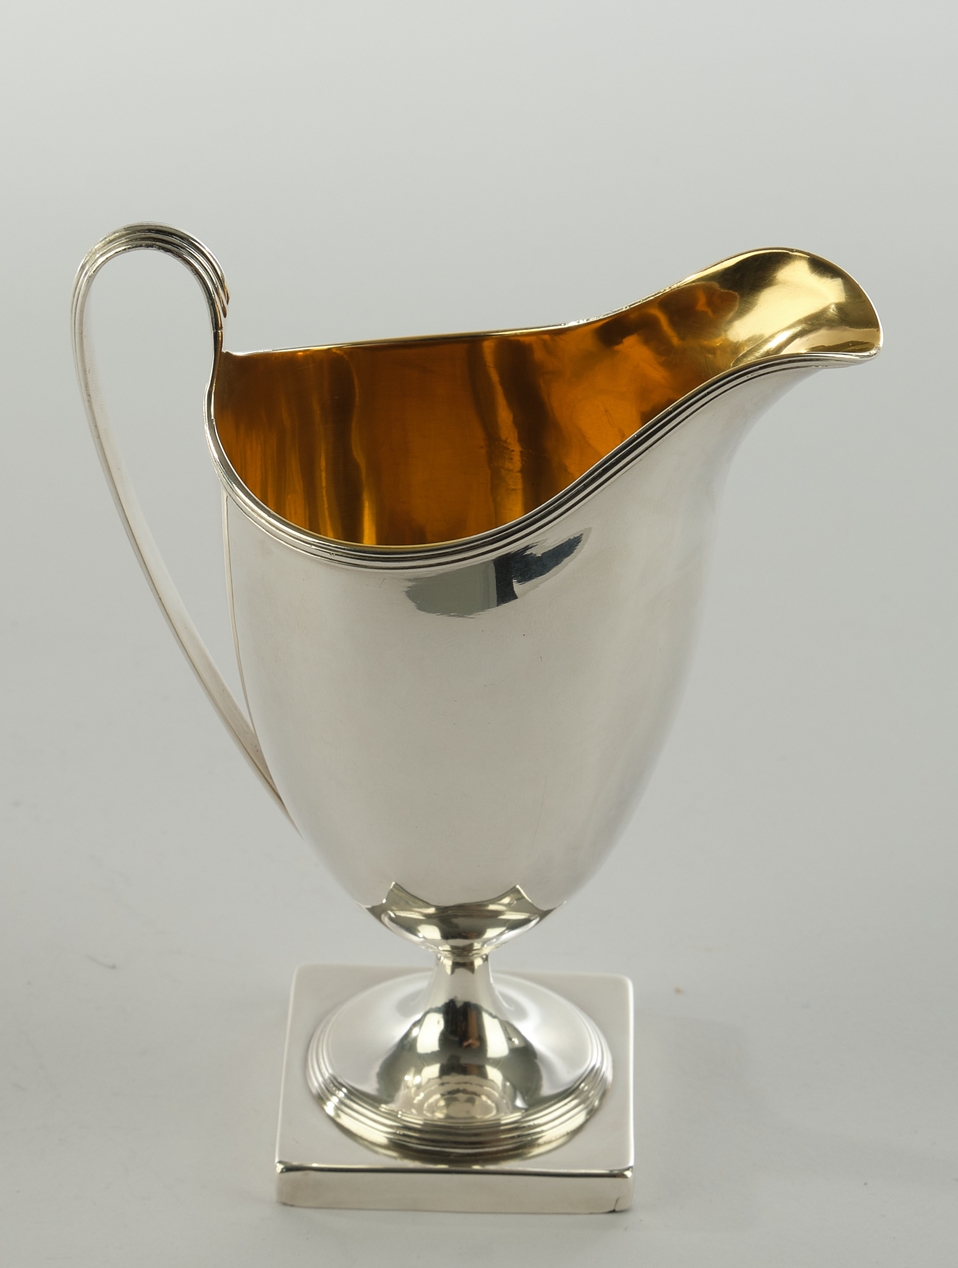 Sahnegießer, Silber 925, London, 1793, Henry Chawner, innen vergoldet, Helmkannenform, schlanker He - Image 2 of 3